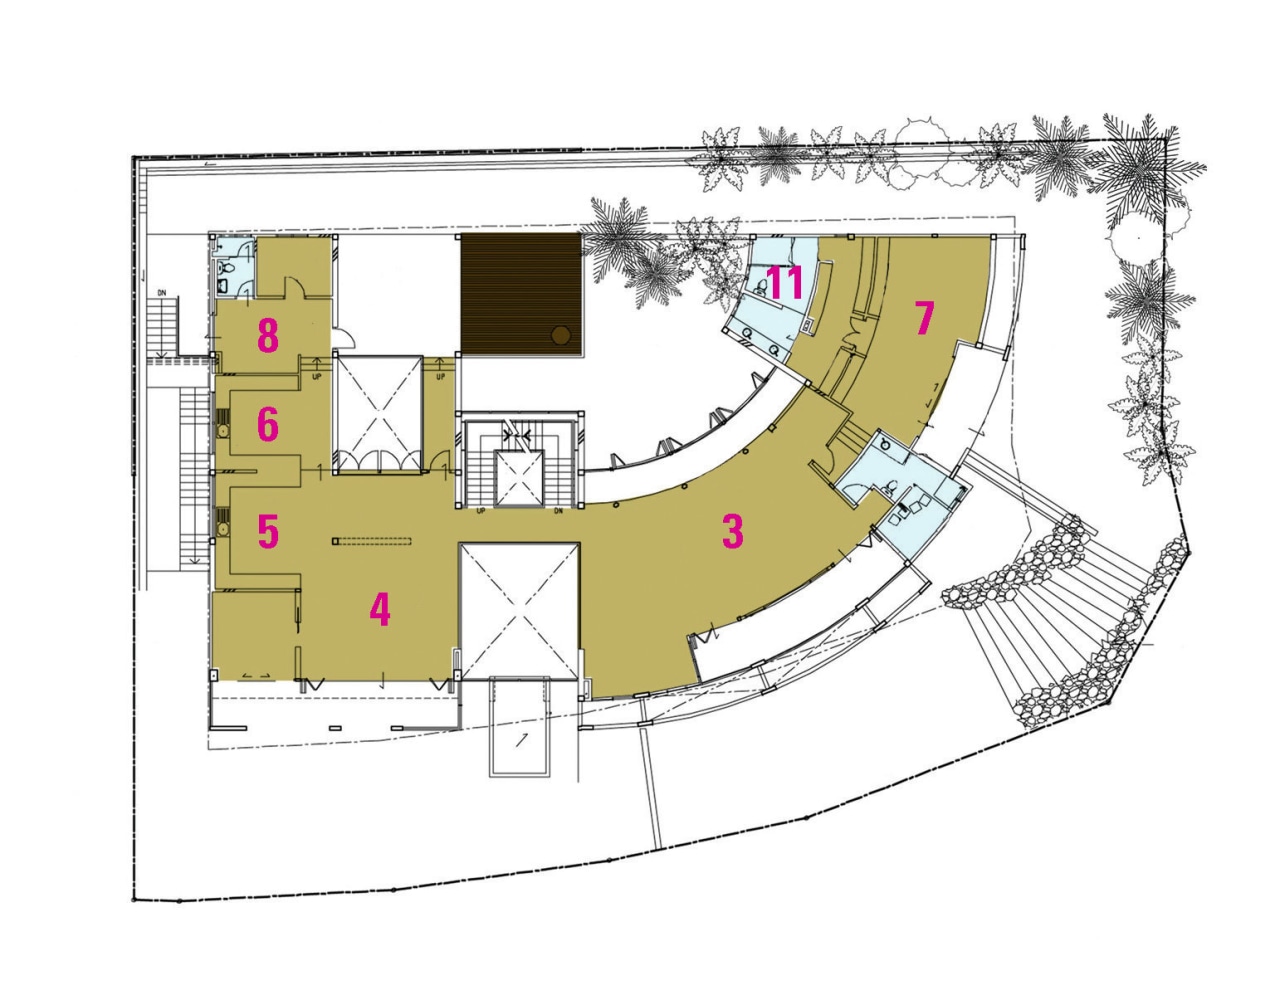 Legend Plan for the house area, diagram, floor plan, plan, product design, white